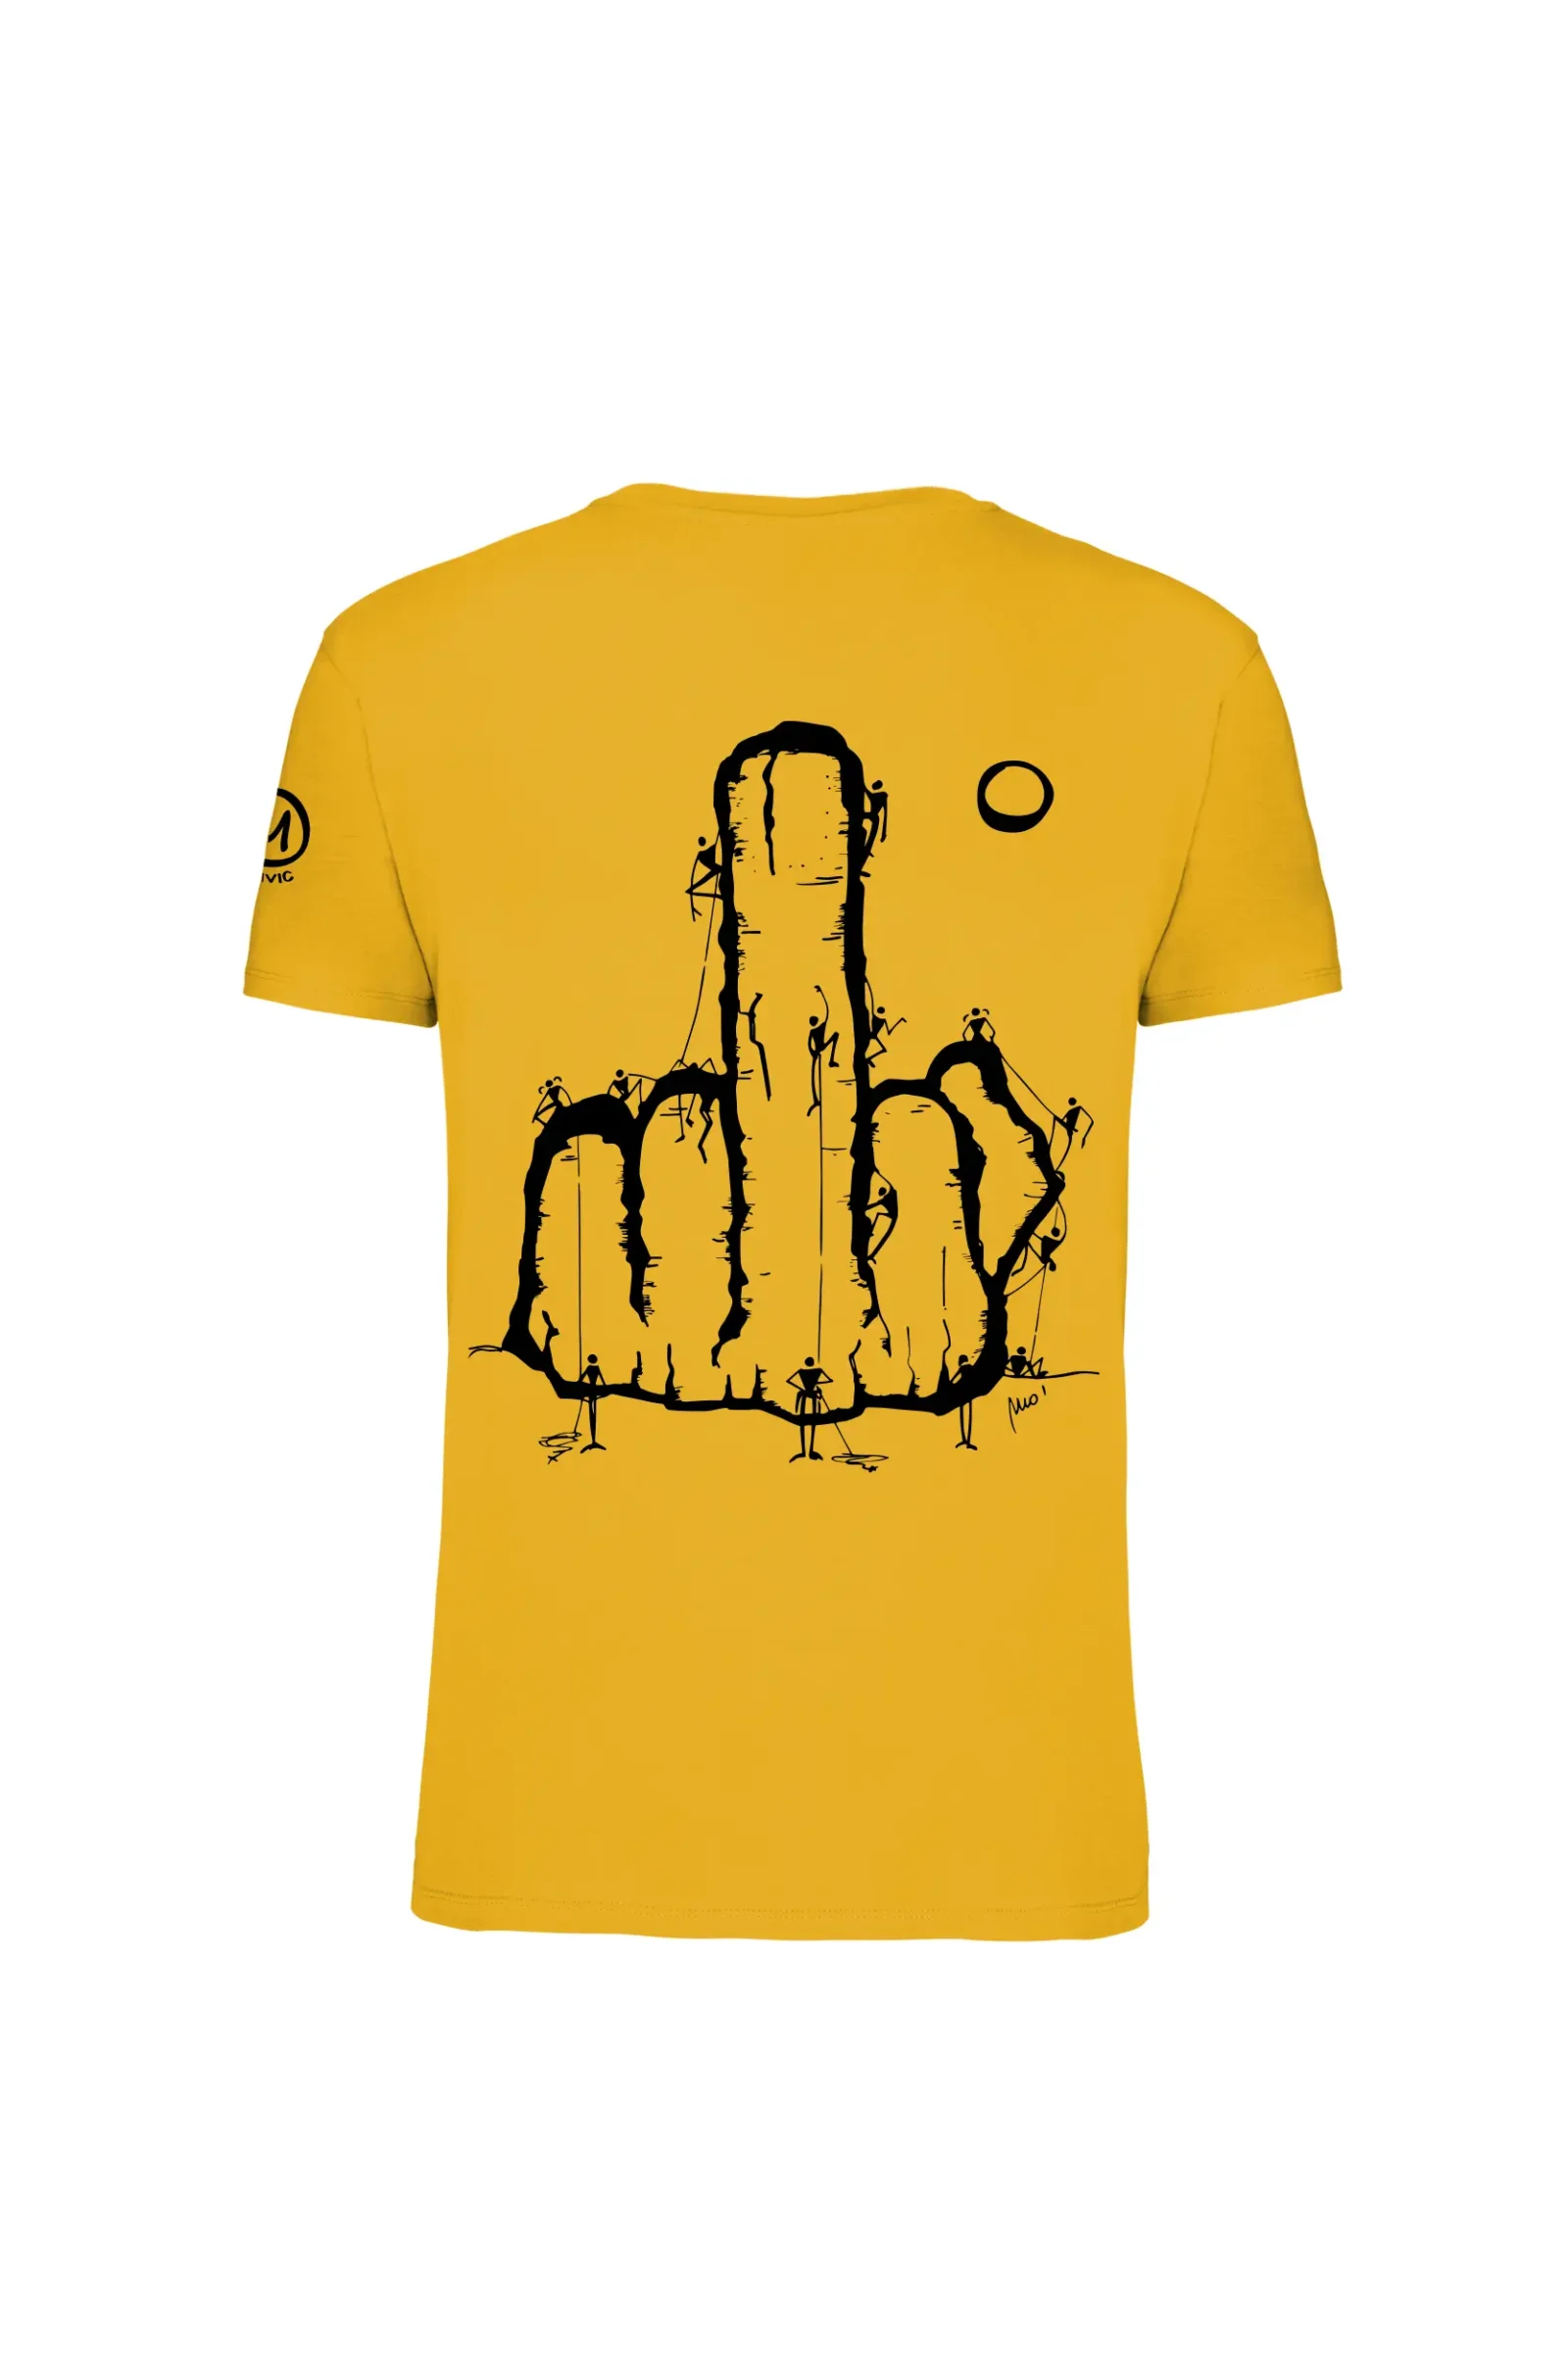 Men's climbing t-shirt - yellow cotton - "Fuck the System" graphics - HASH MONVIC